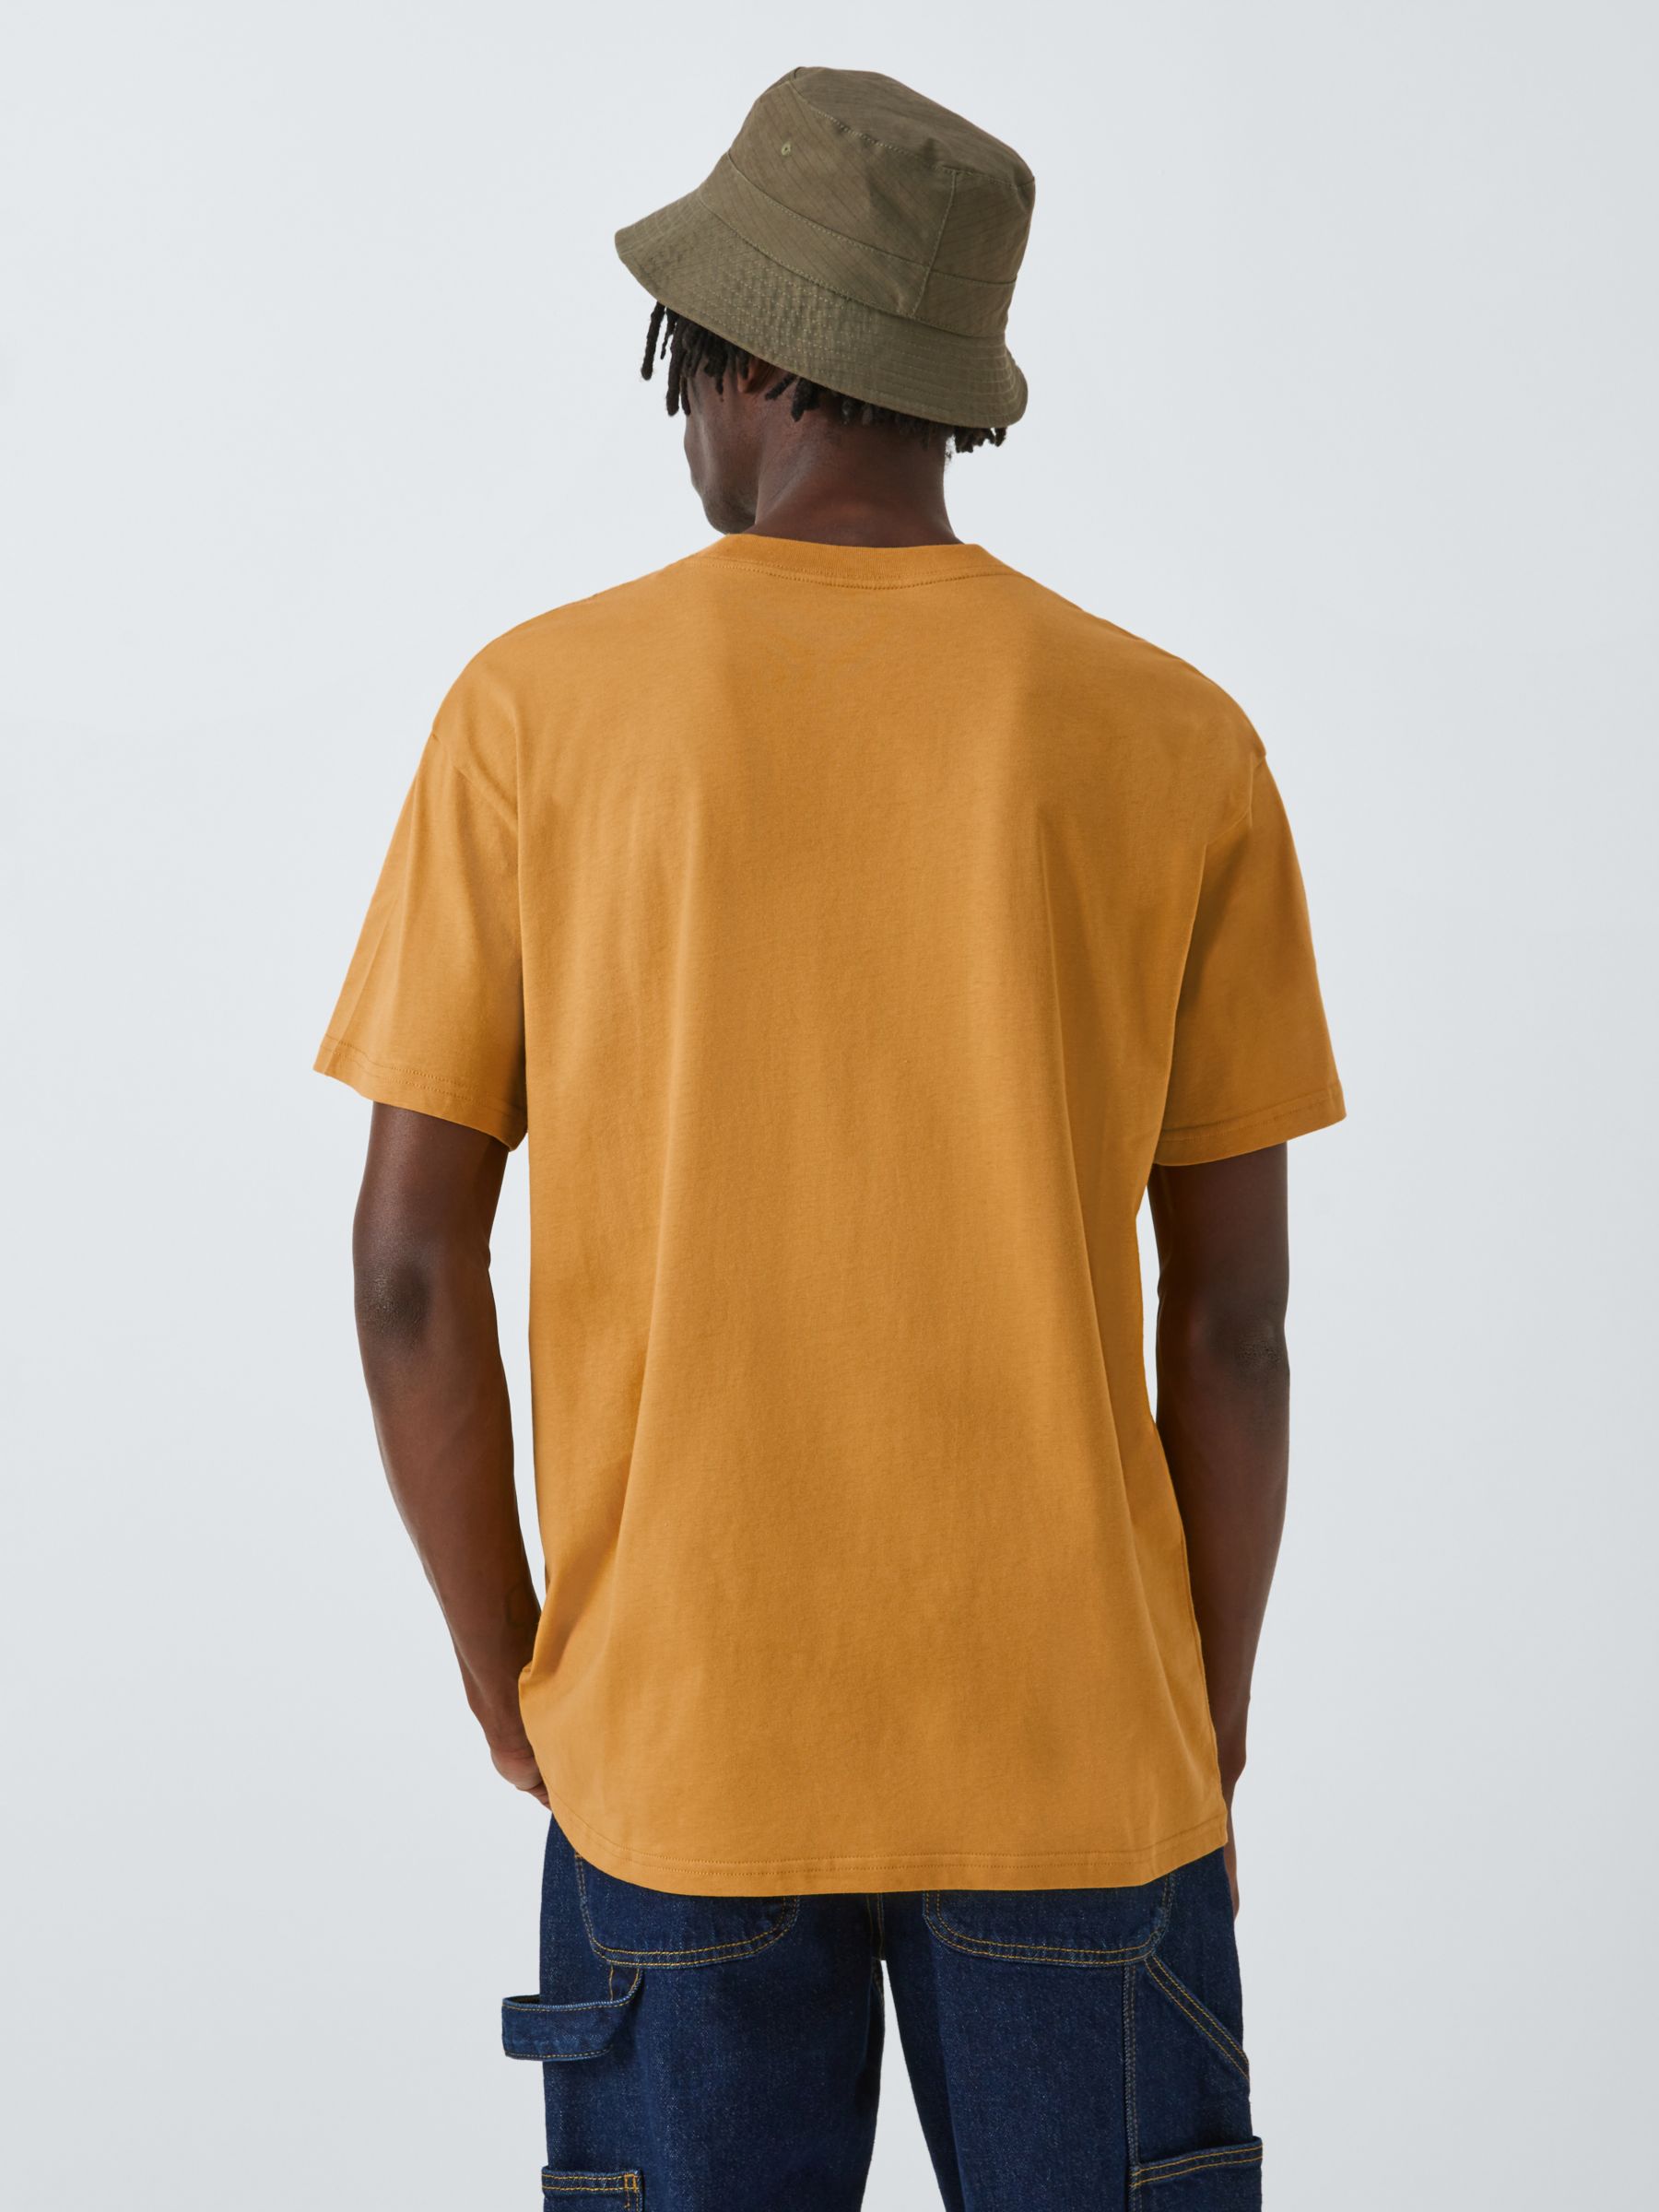 Carhartt WIP Srround Organic Cotton Short Sleeve T-Shirt, Sunray, M